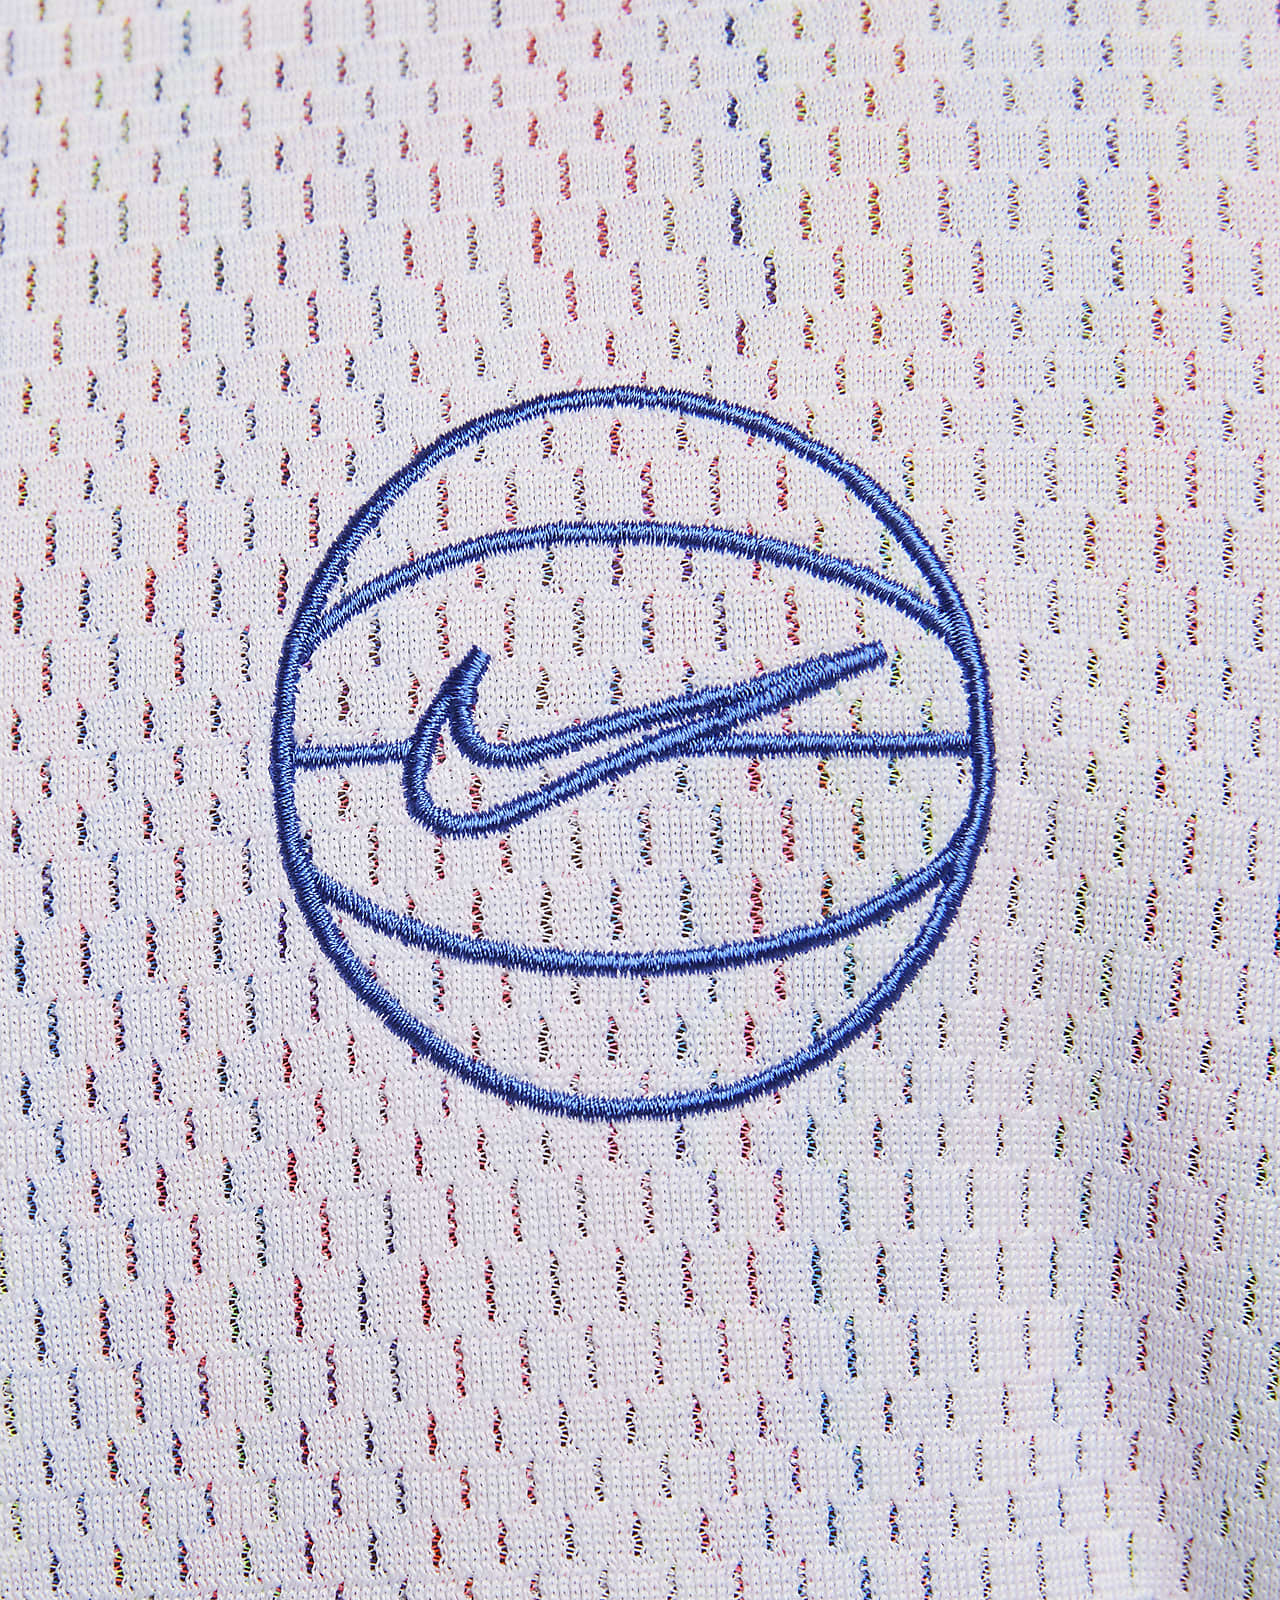 Maillot de basket Nike Equipes nationales - CQ0142